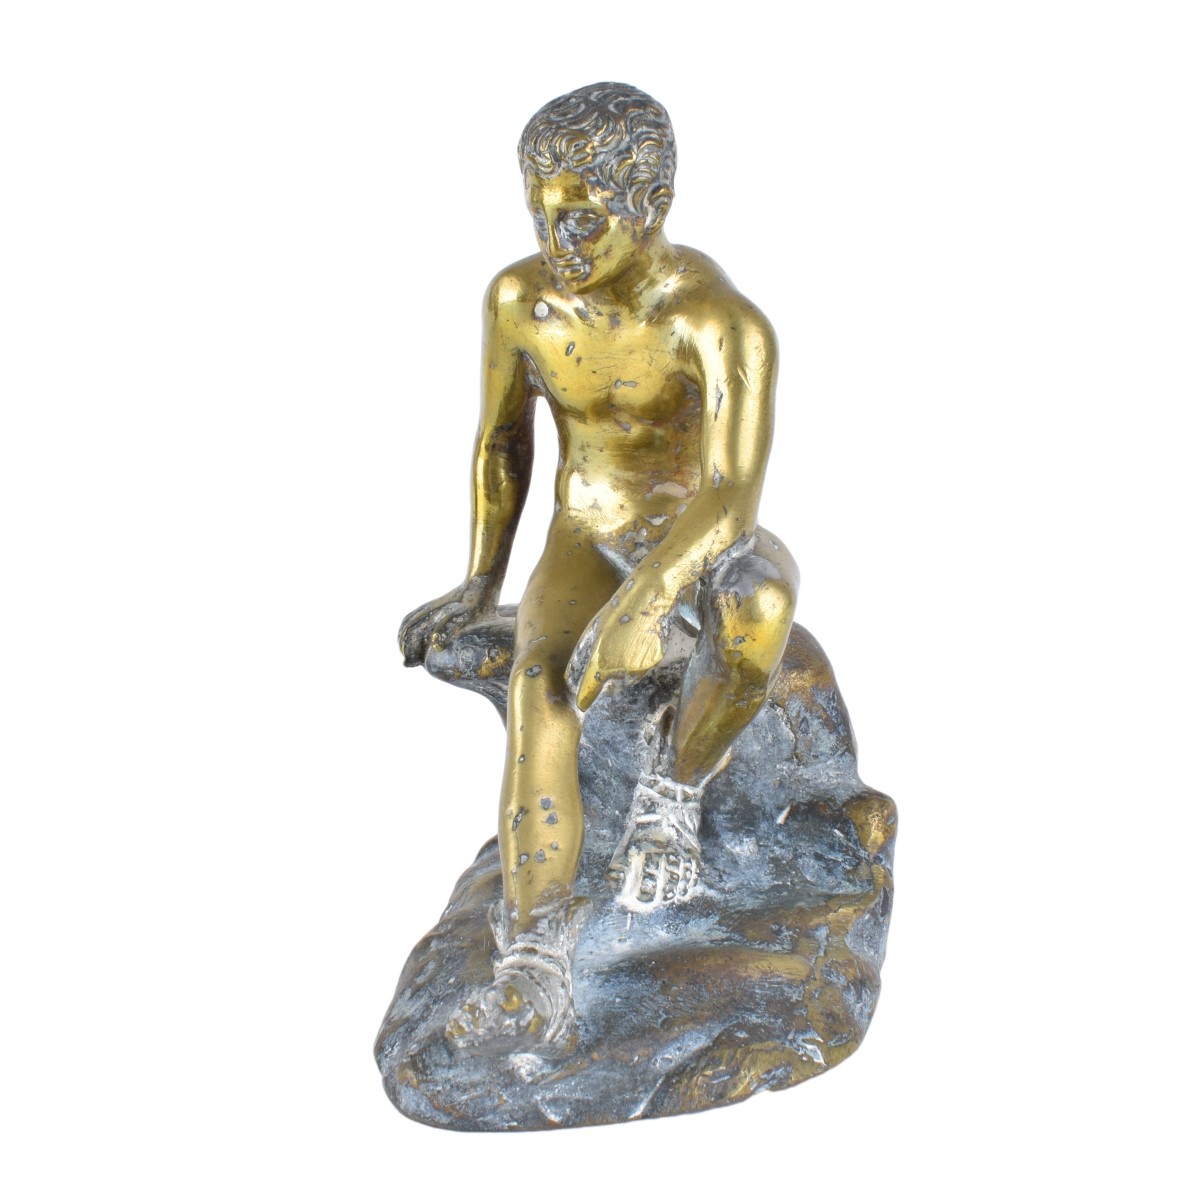 Two (2) Antique Bronze Figurines